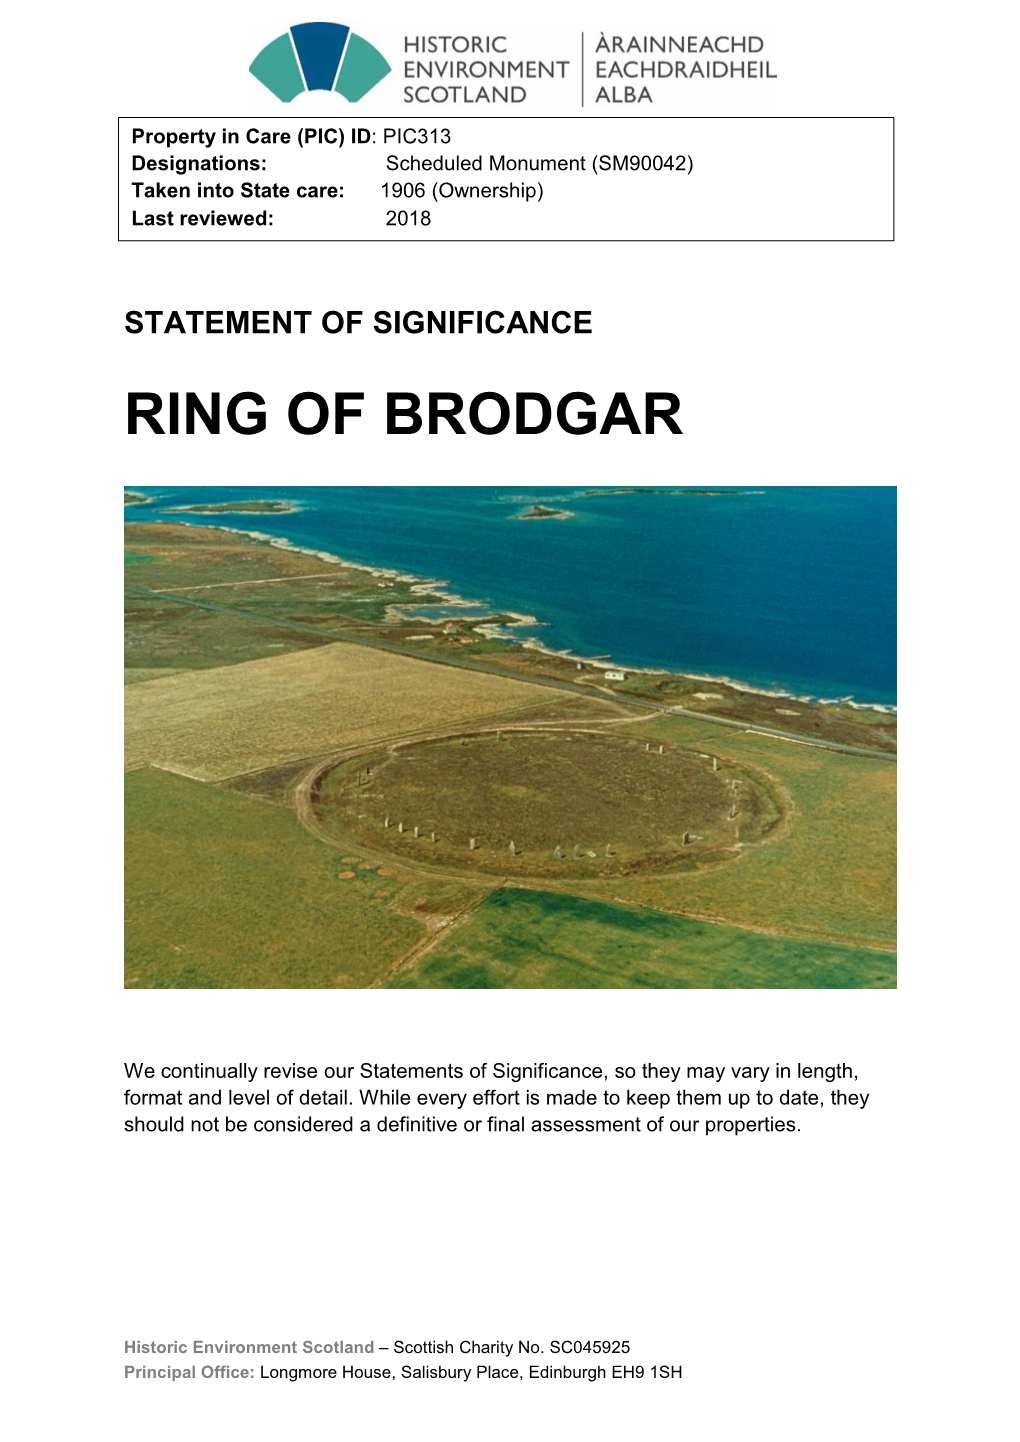 Ring of Brodgar